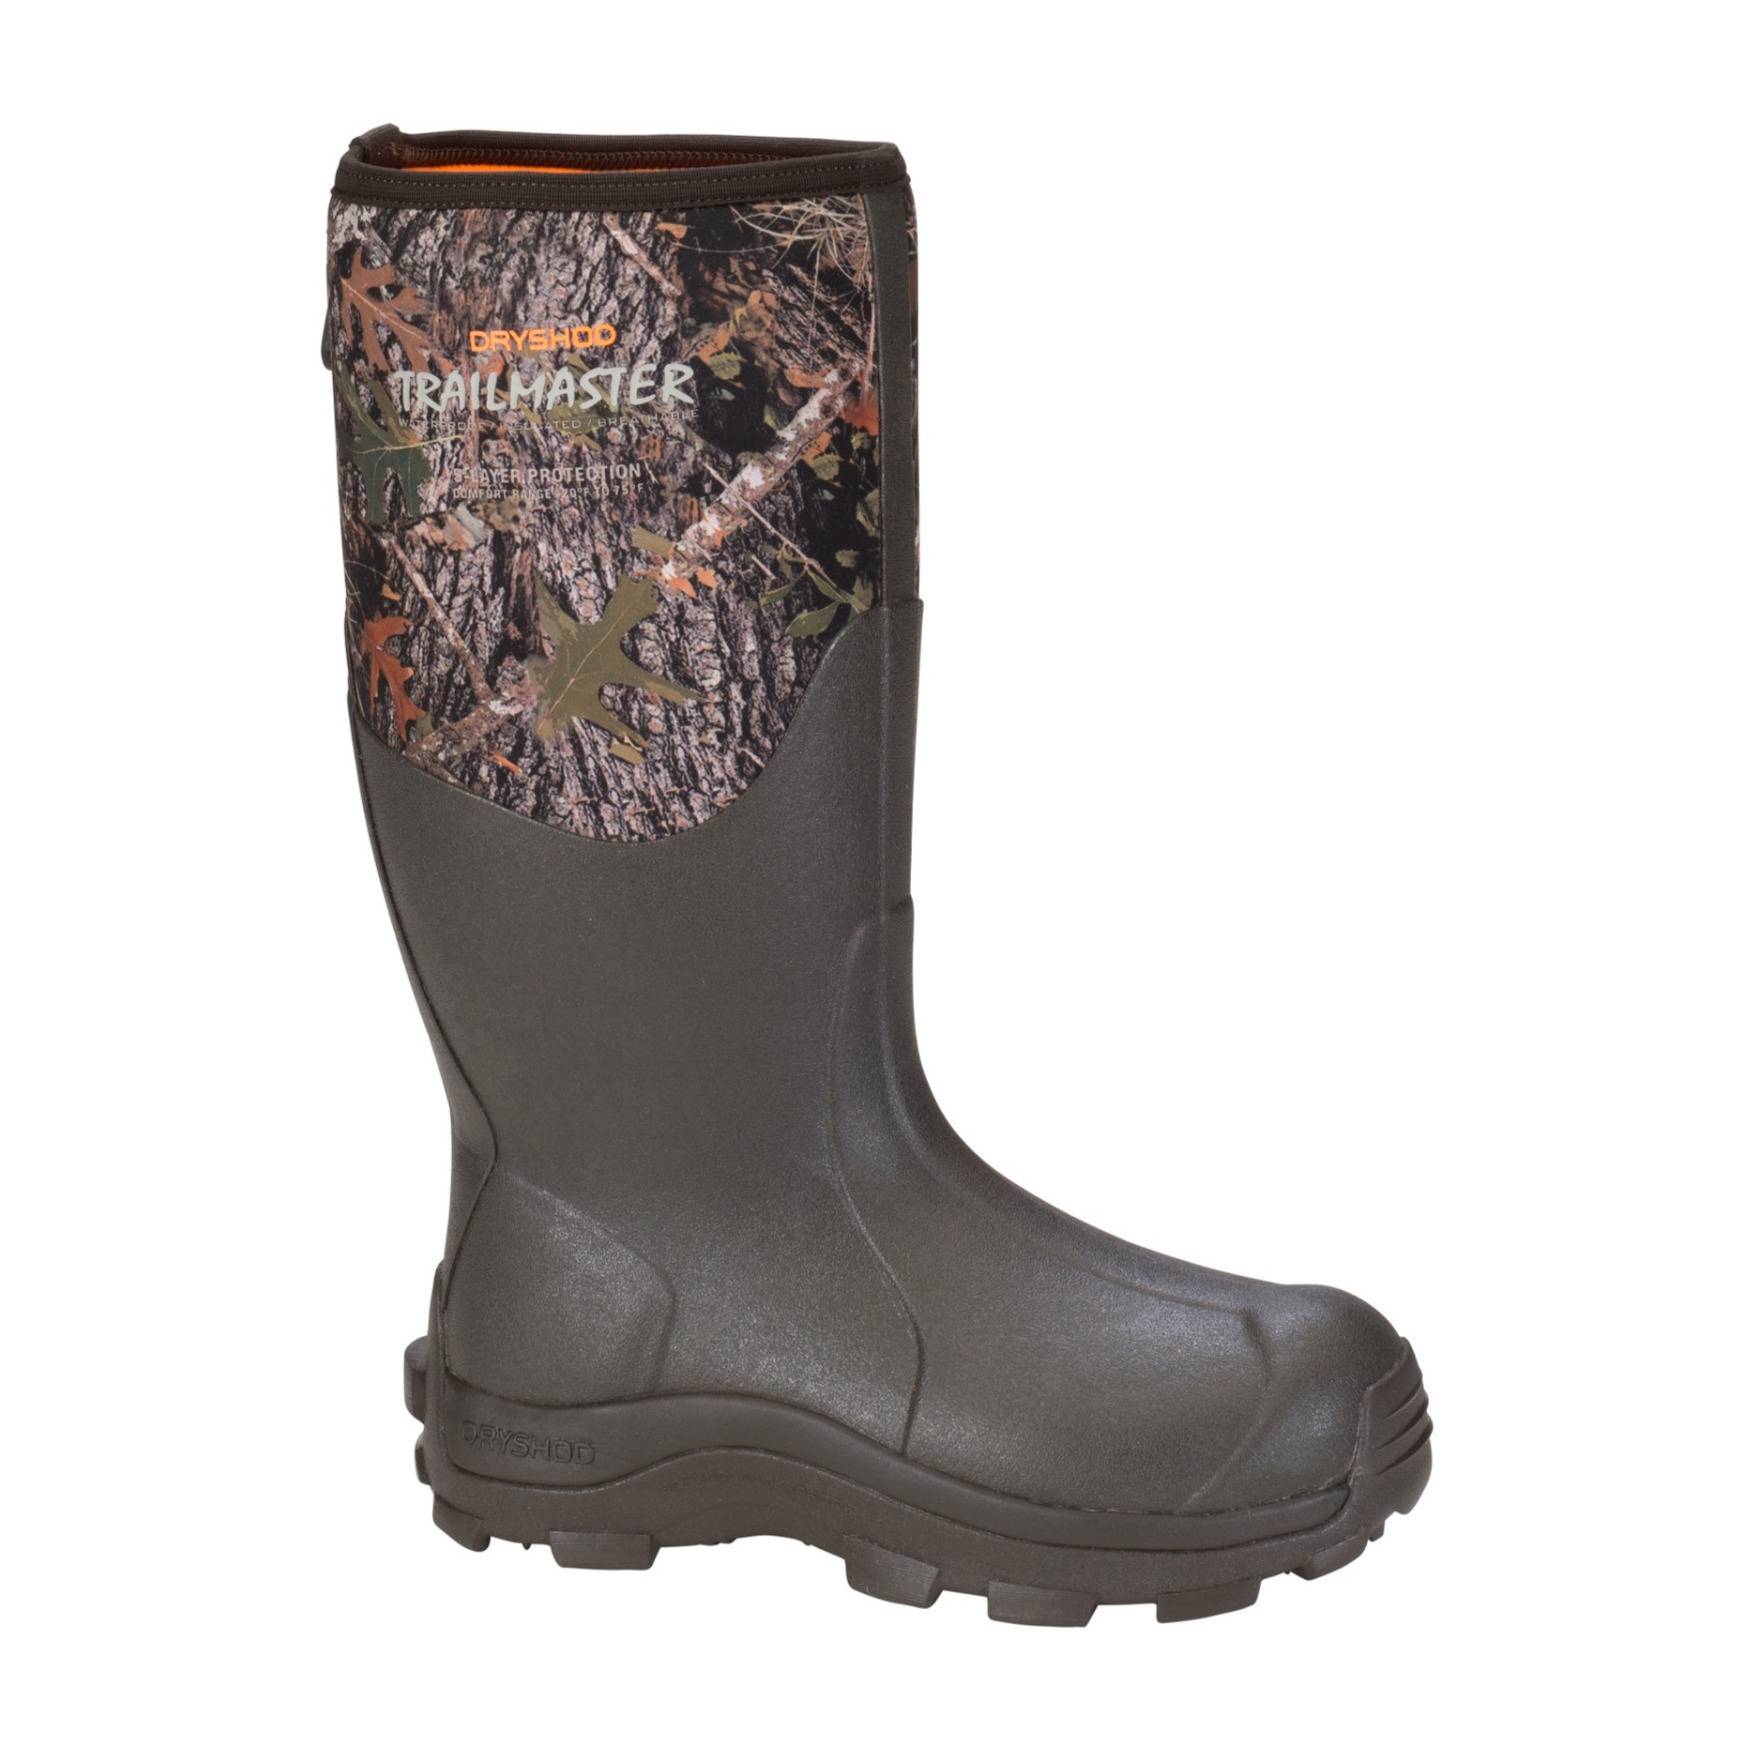 DryShod Trailmaster Men’s Hunting Boots (Size 09, Camo/Bark)